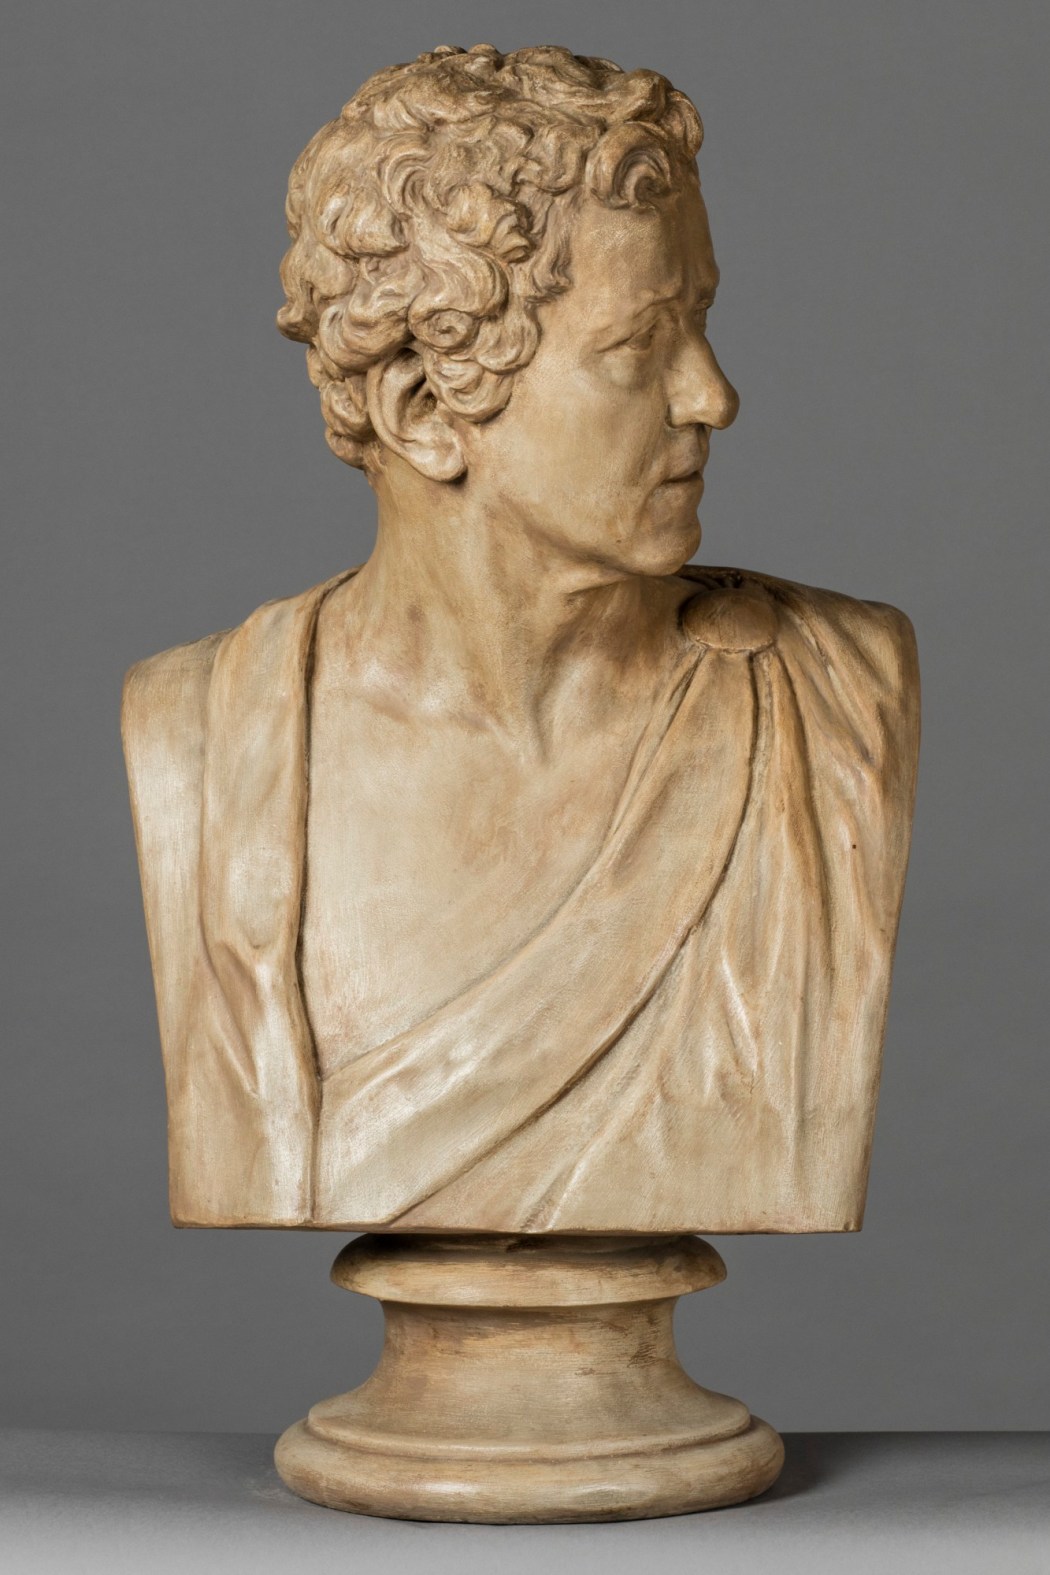 Giuseppe Ceracchi, George Washington, Italian, Florence